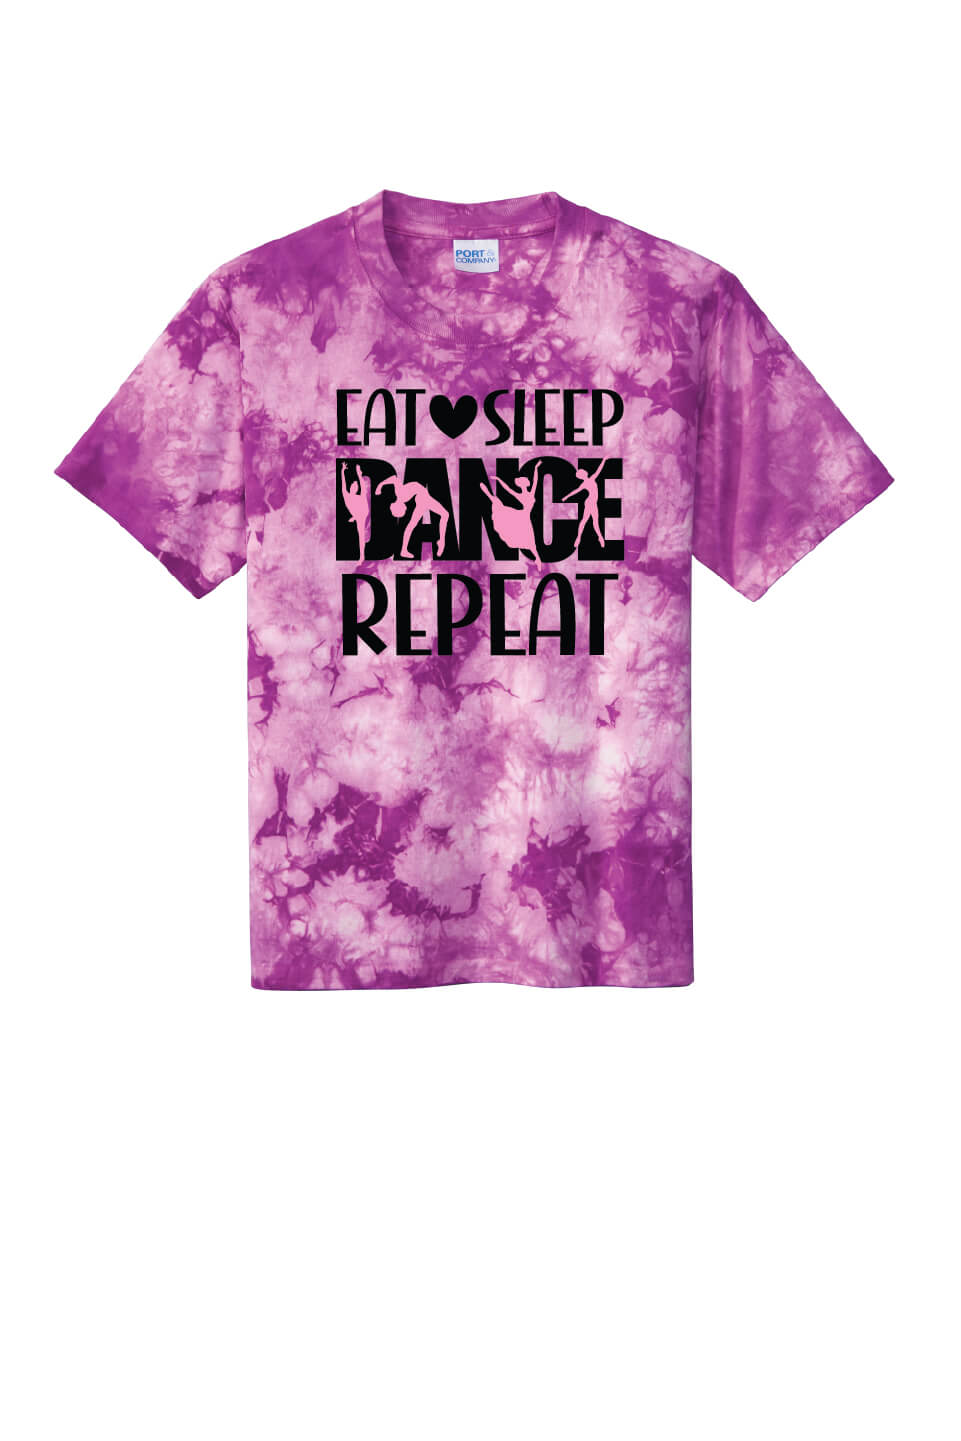 Eat Sleep Dance Repeat Tie Dye Short Sleeve T-Shirt (Youth) pink